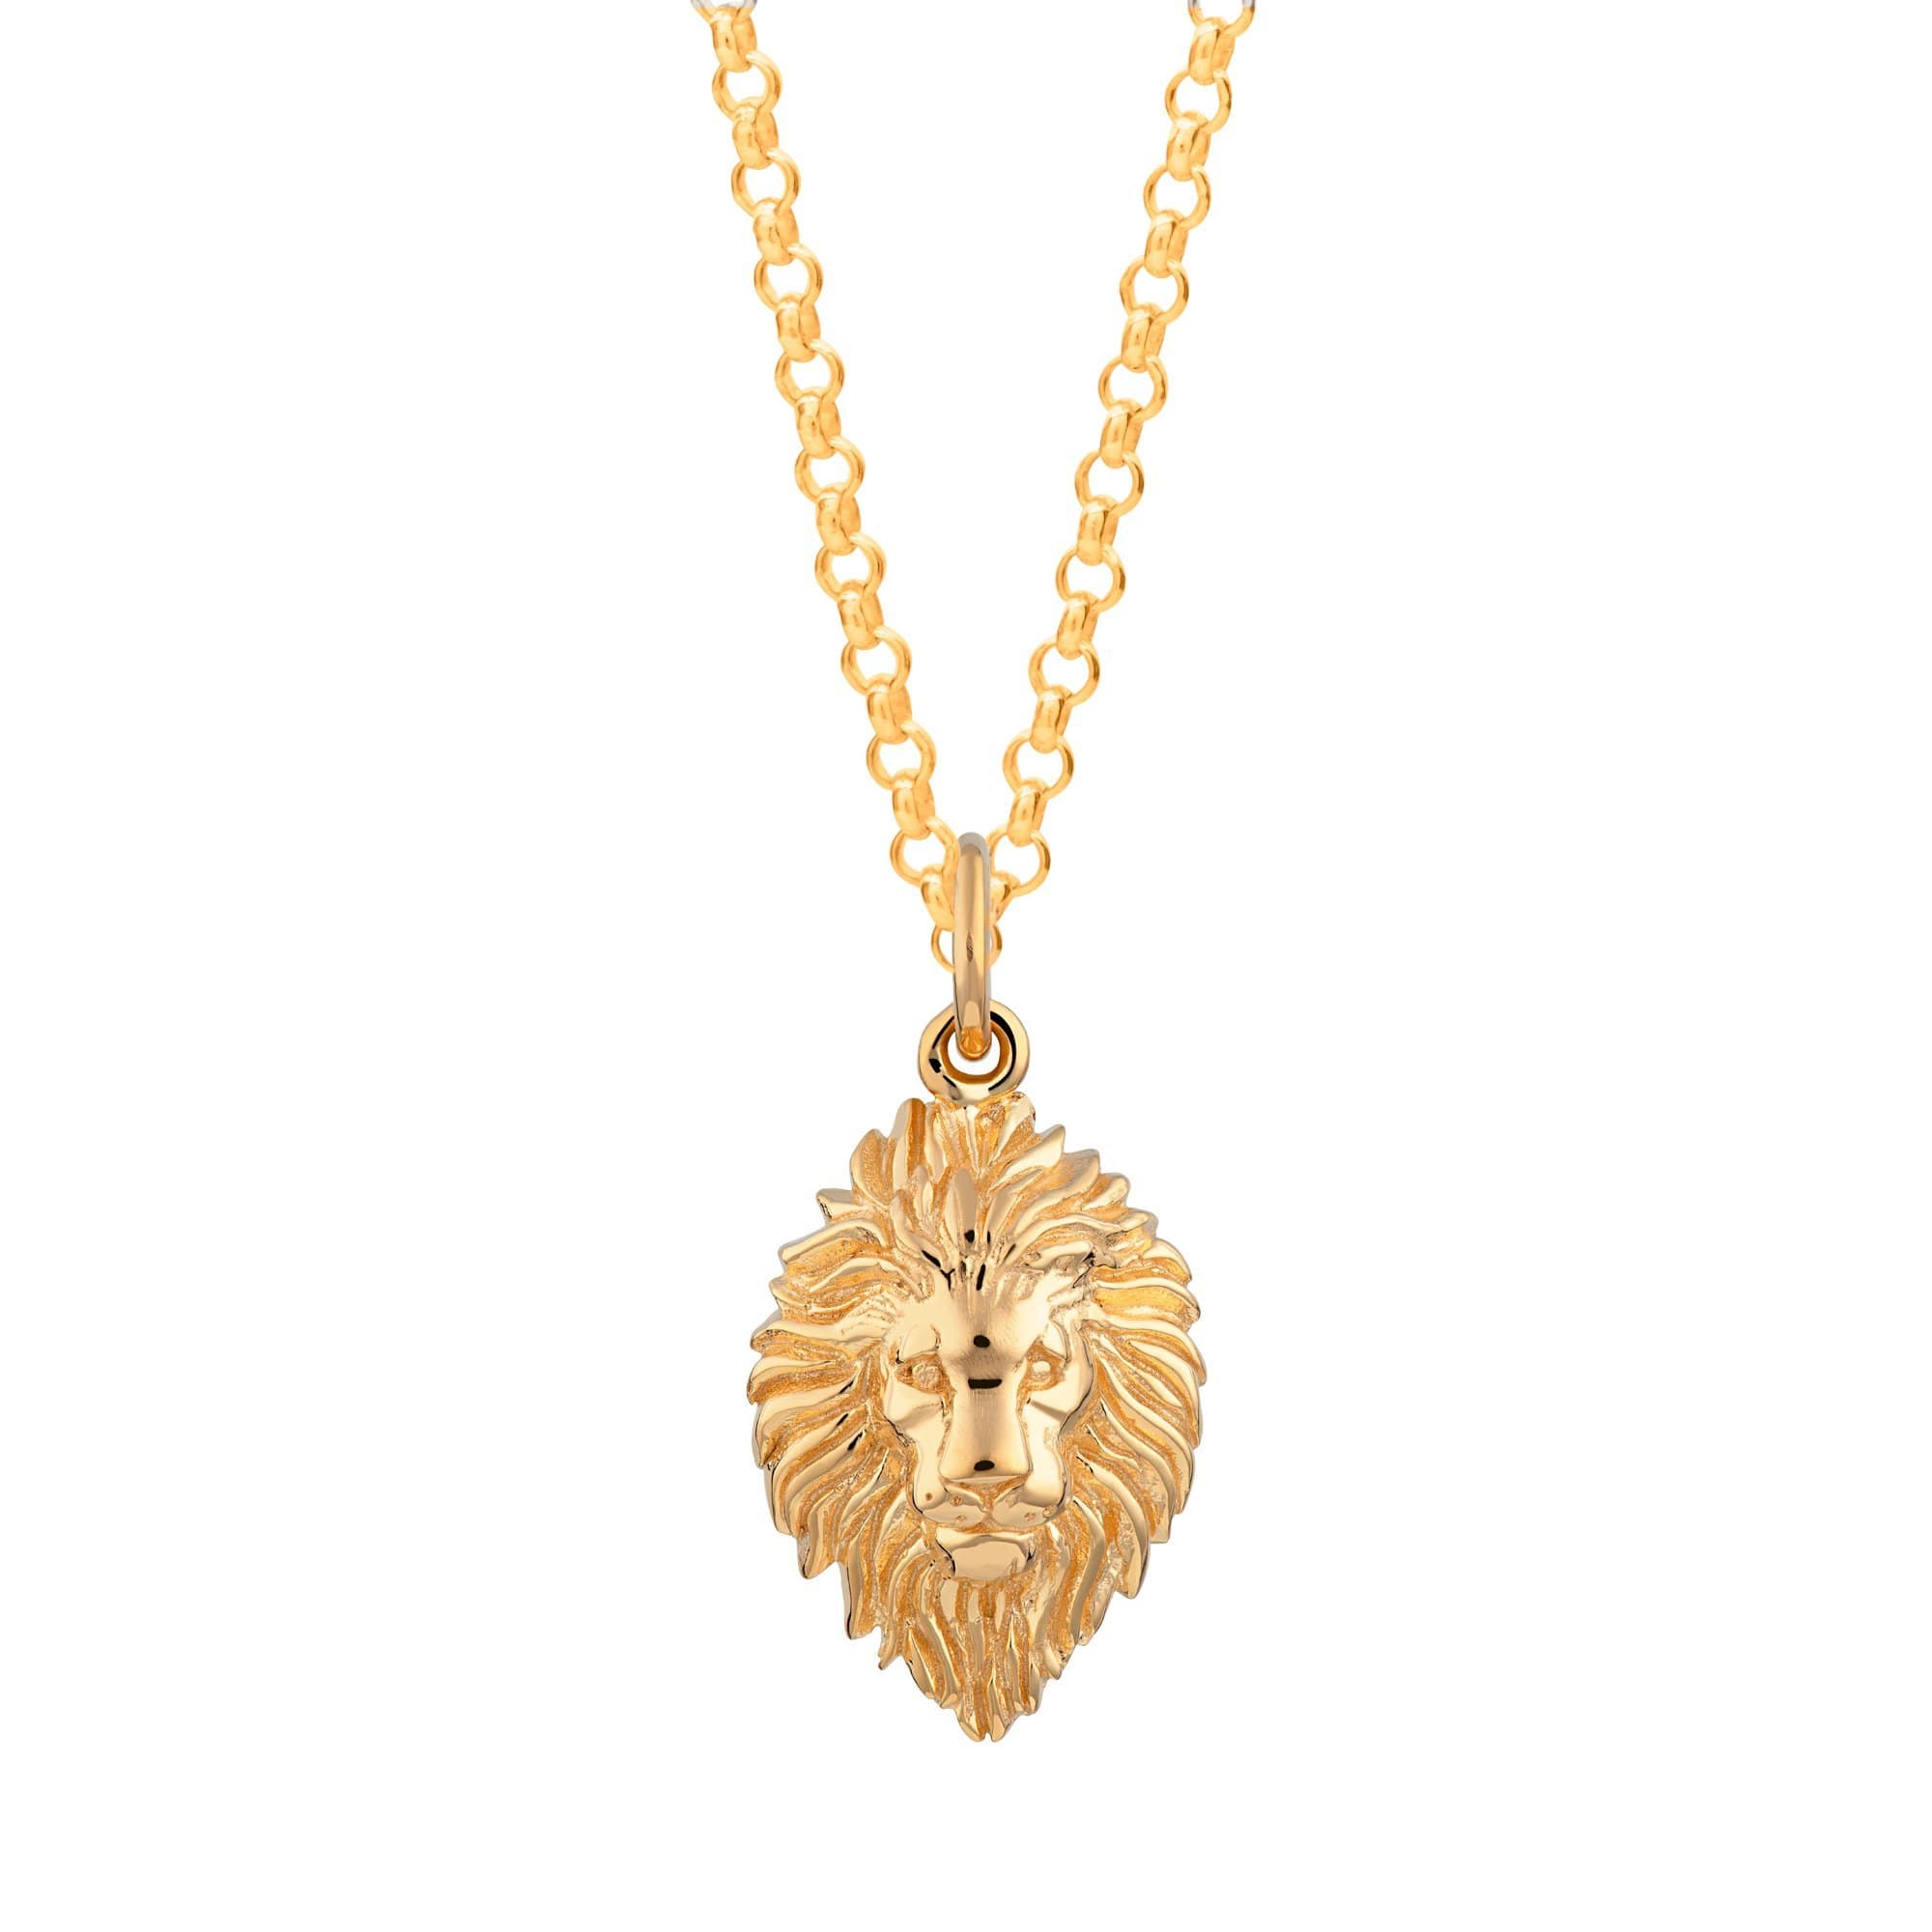  Lion Head Necklace - by Scream Pretty